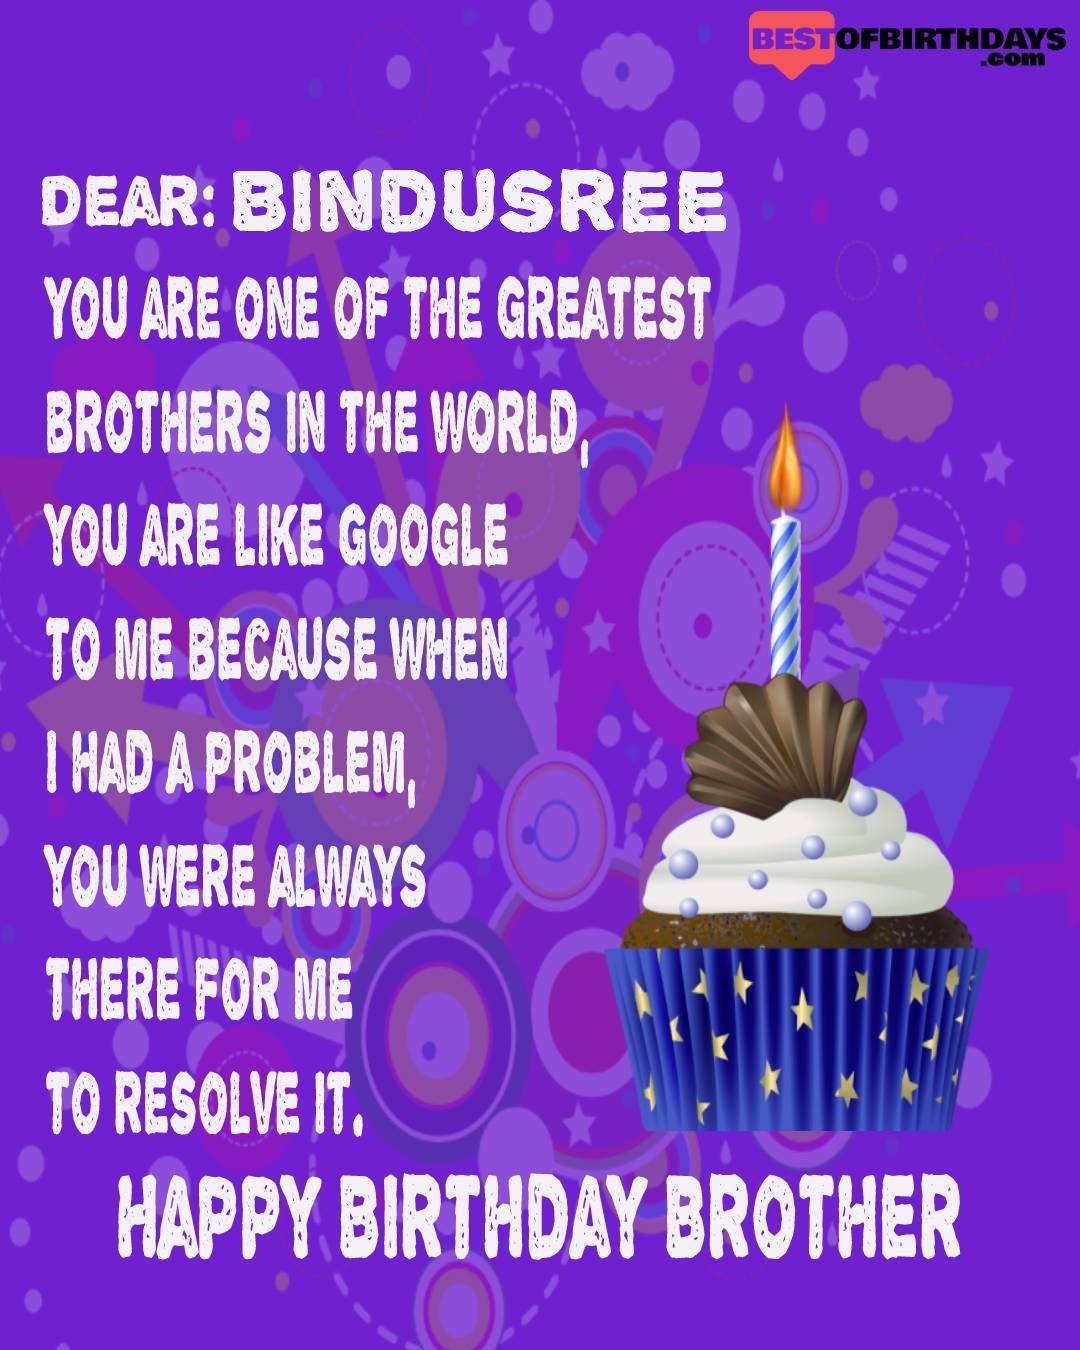 Happy birthday bindusree bhai brother bro